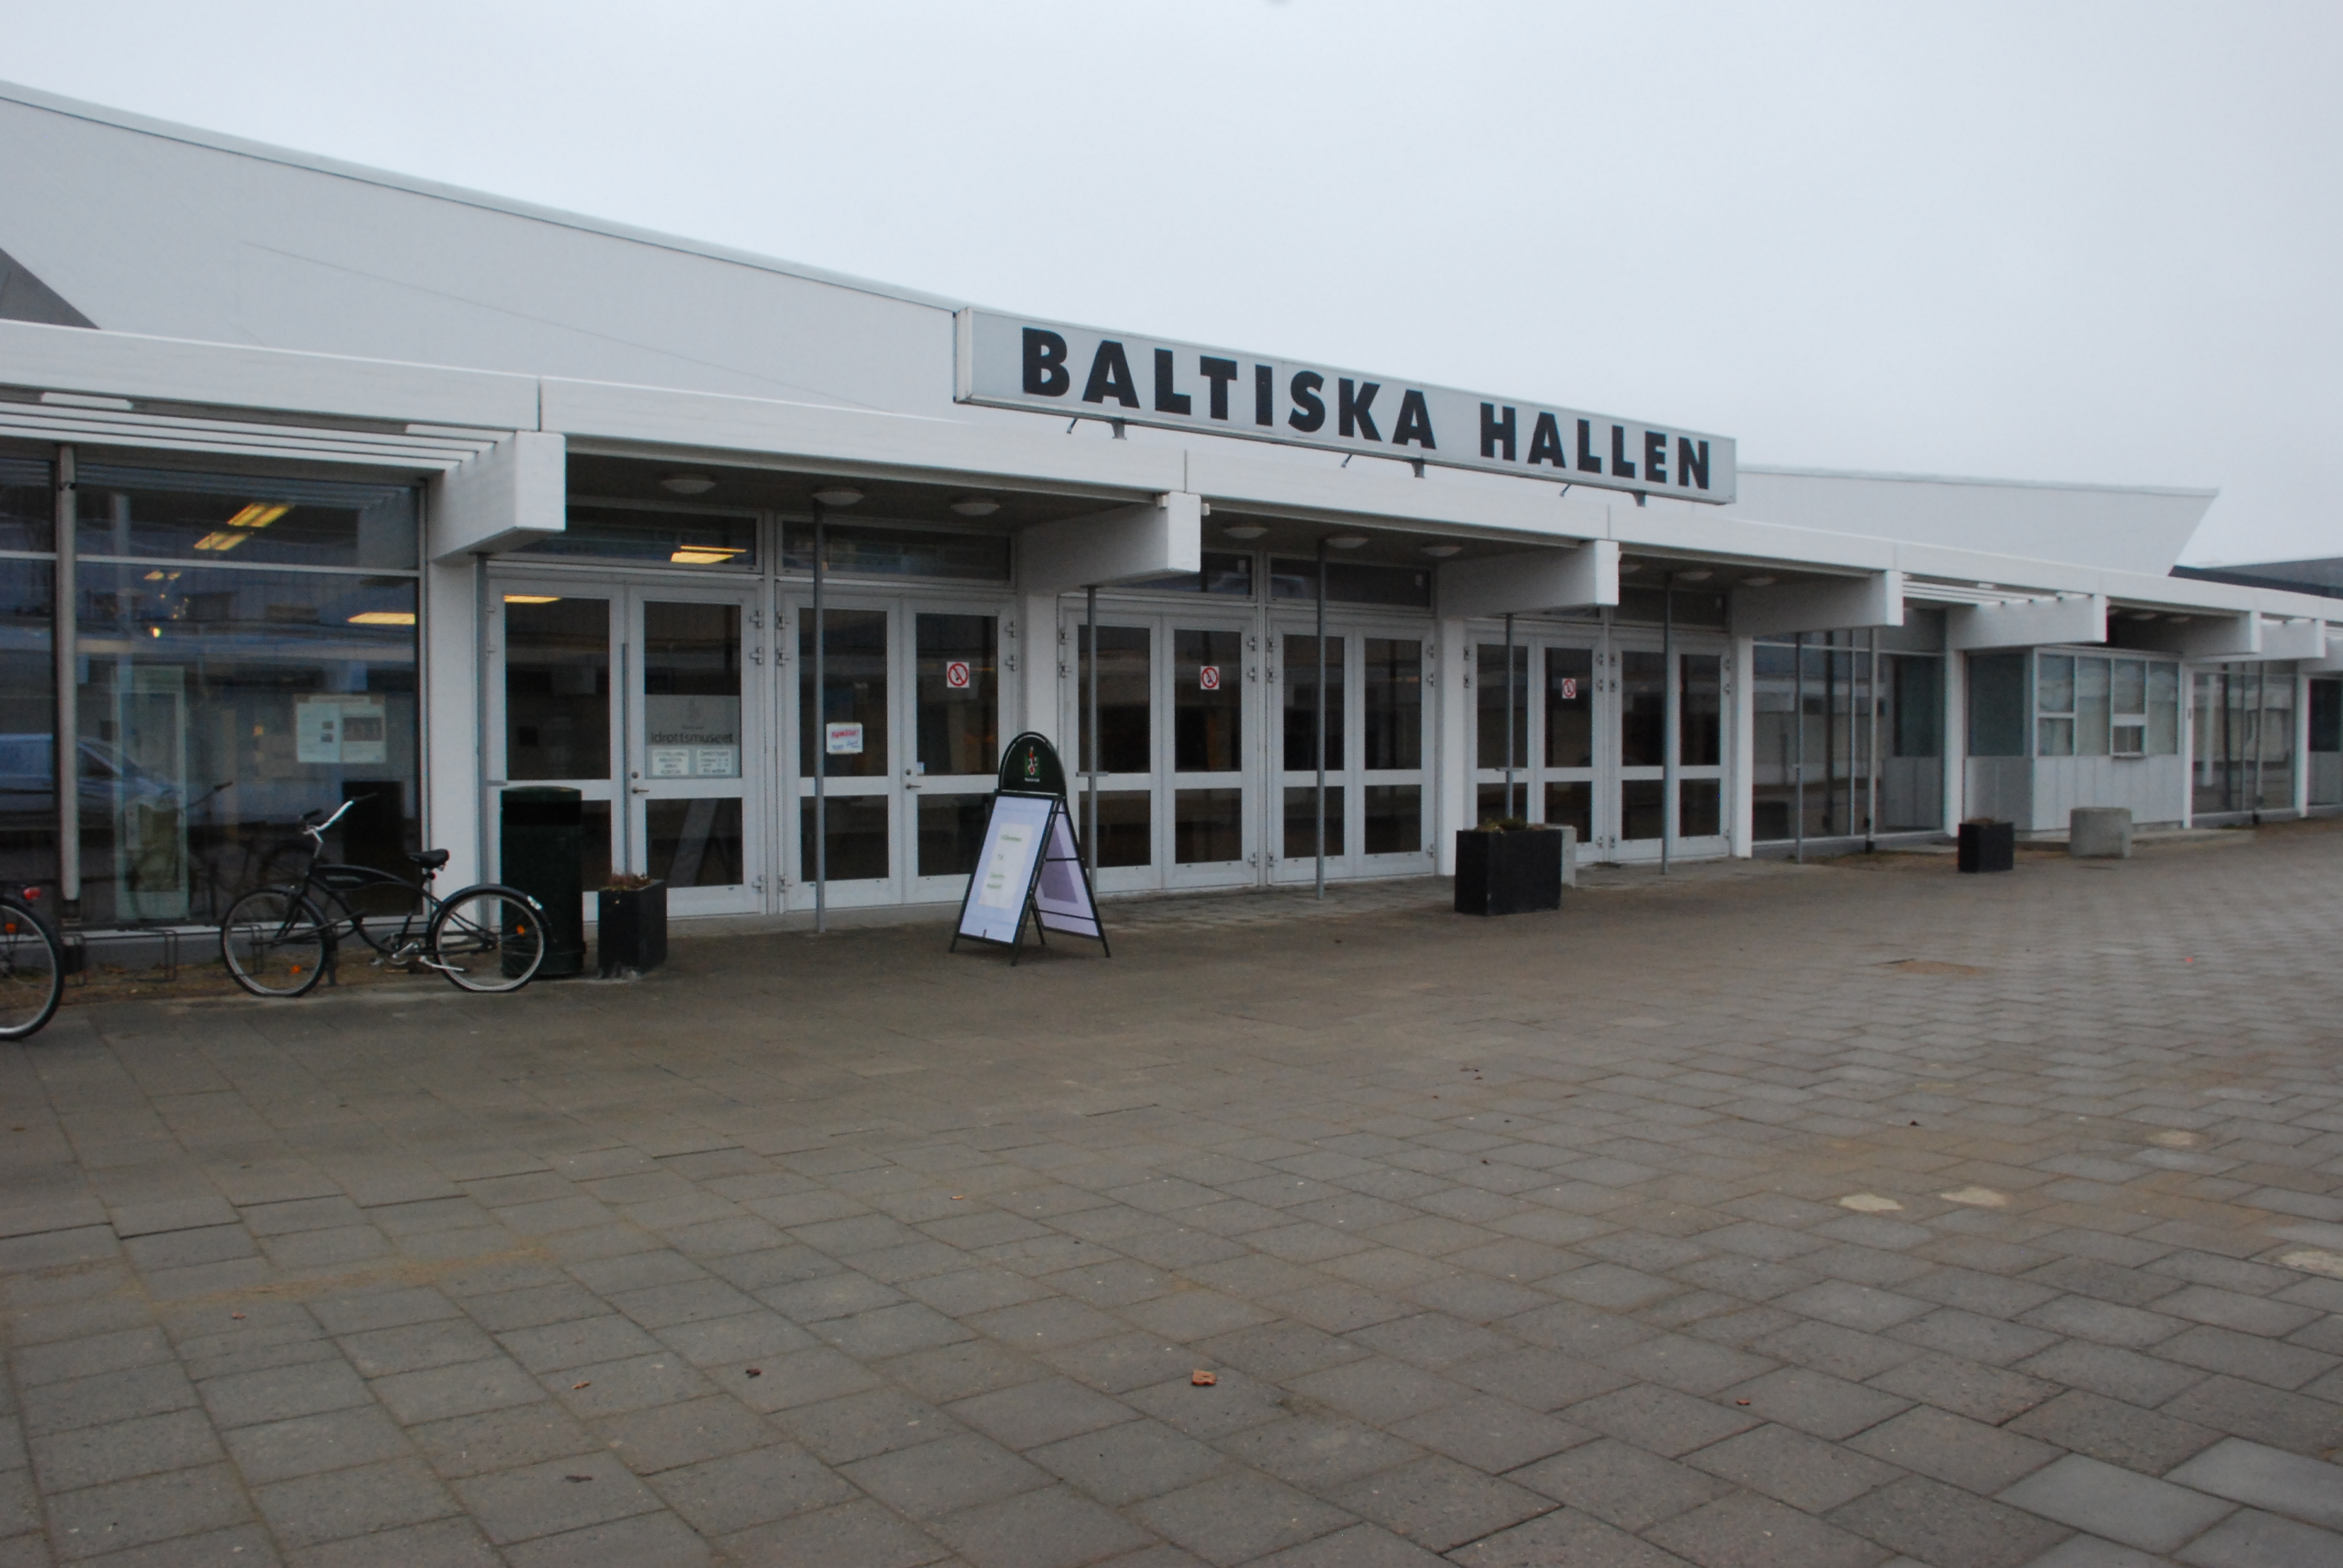 Baltiska hallen